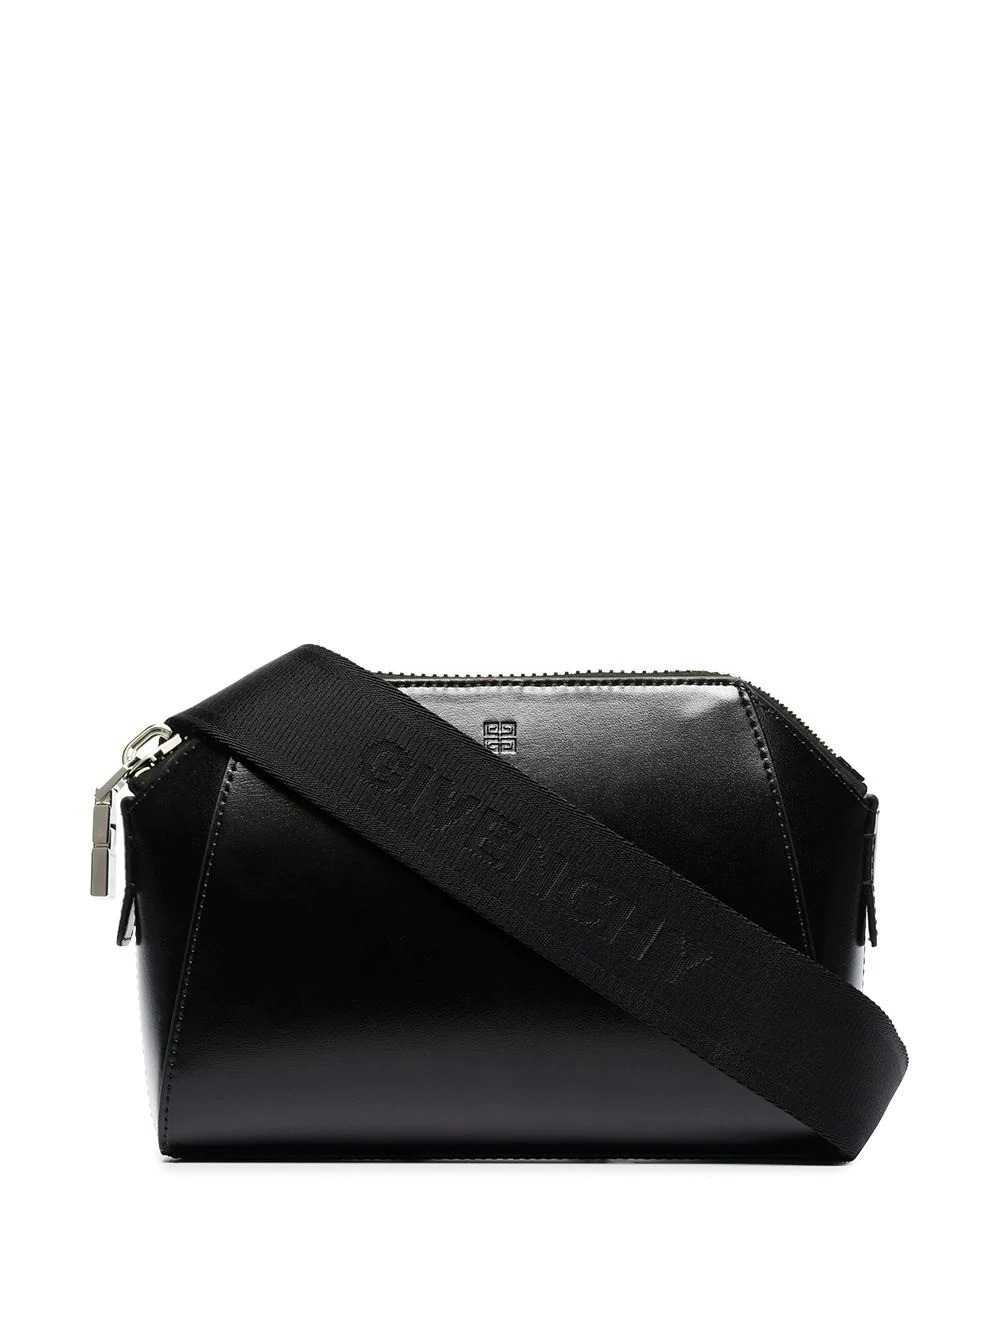 Givenchy - Antigona leather messenger bag